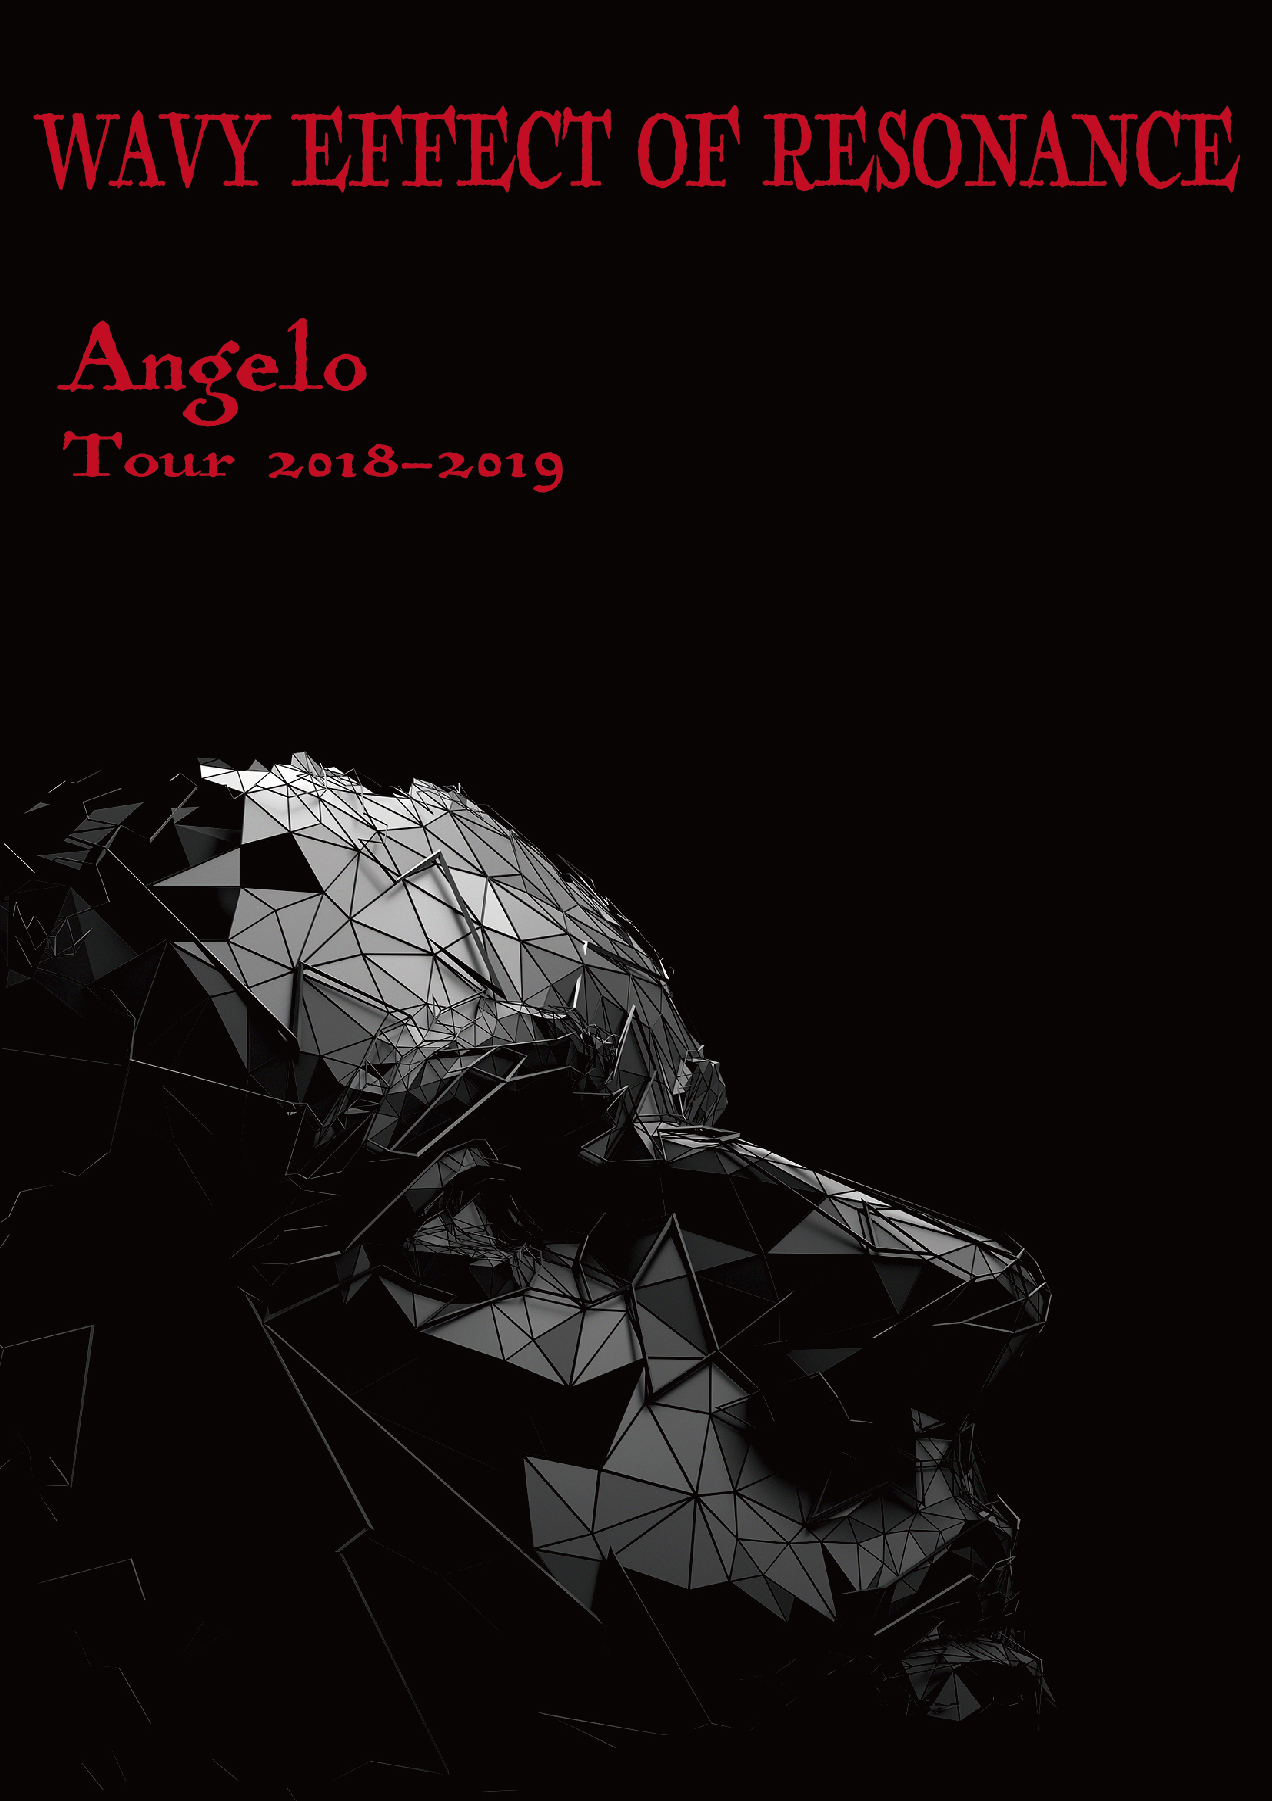 【DVD】 Angelo Tour 2018-2019「WAVY EFFECT OF RESONANCE」